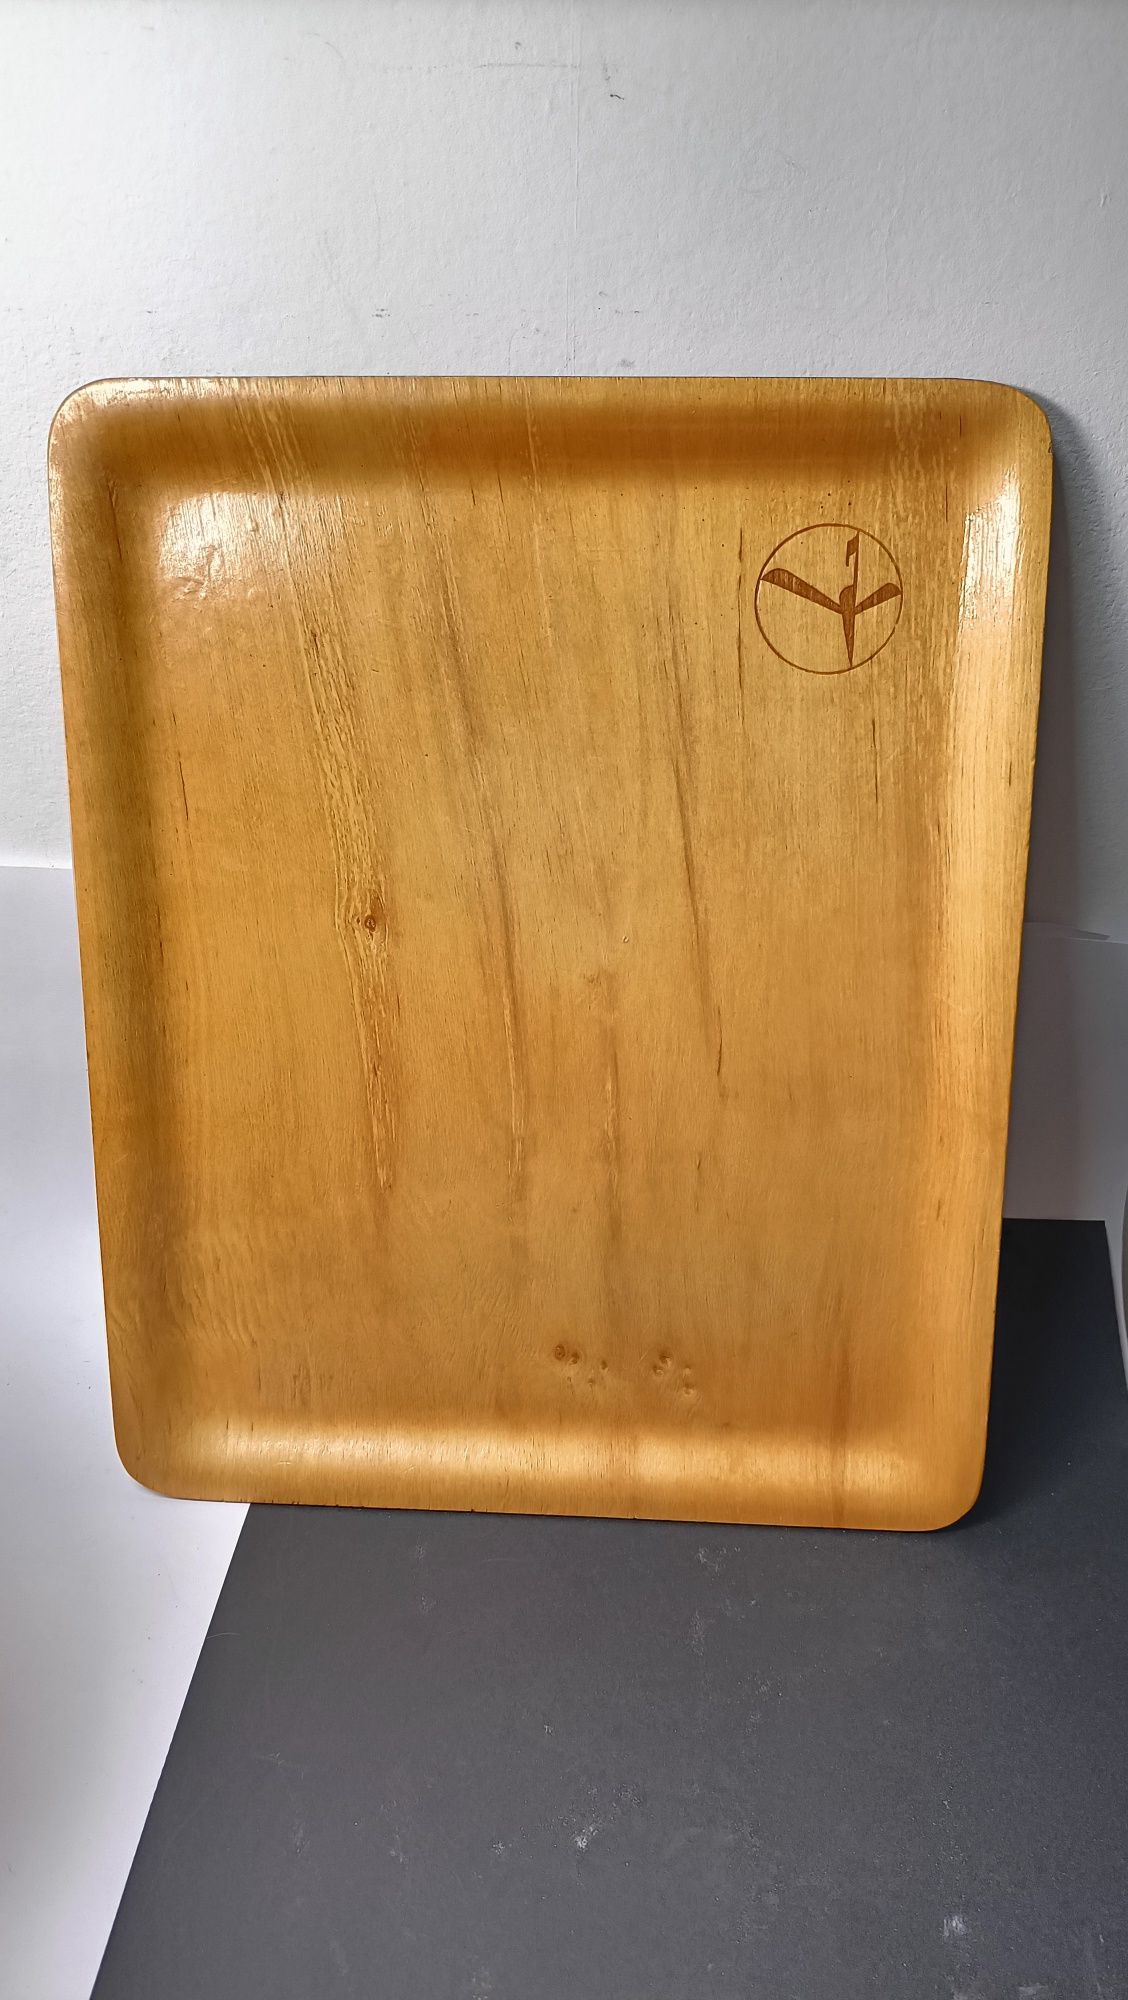 Kolekcjonerska stara taca drewniana LOT stare logo z lat 60. T30